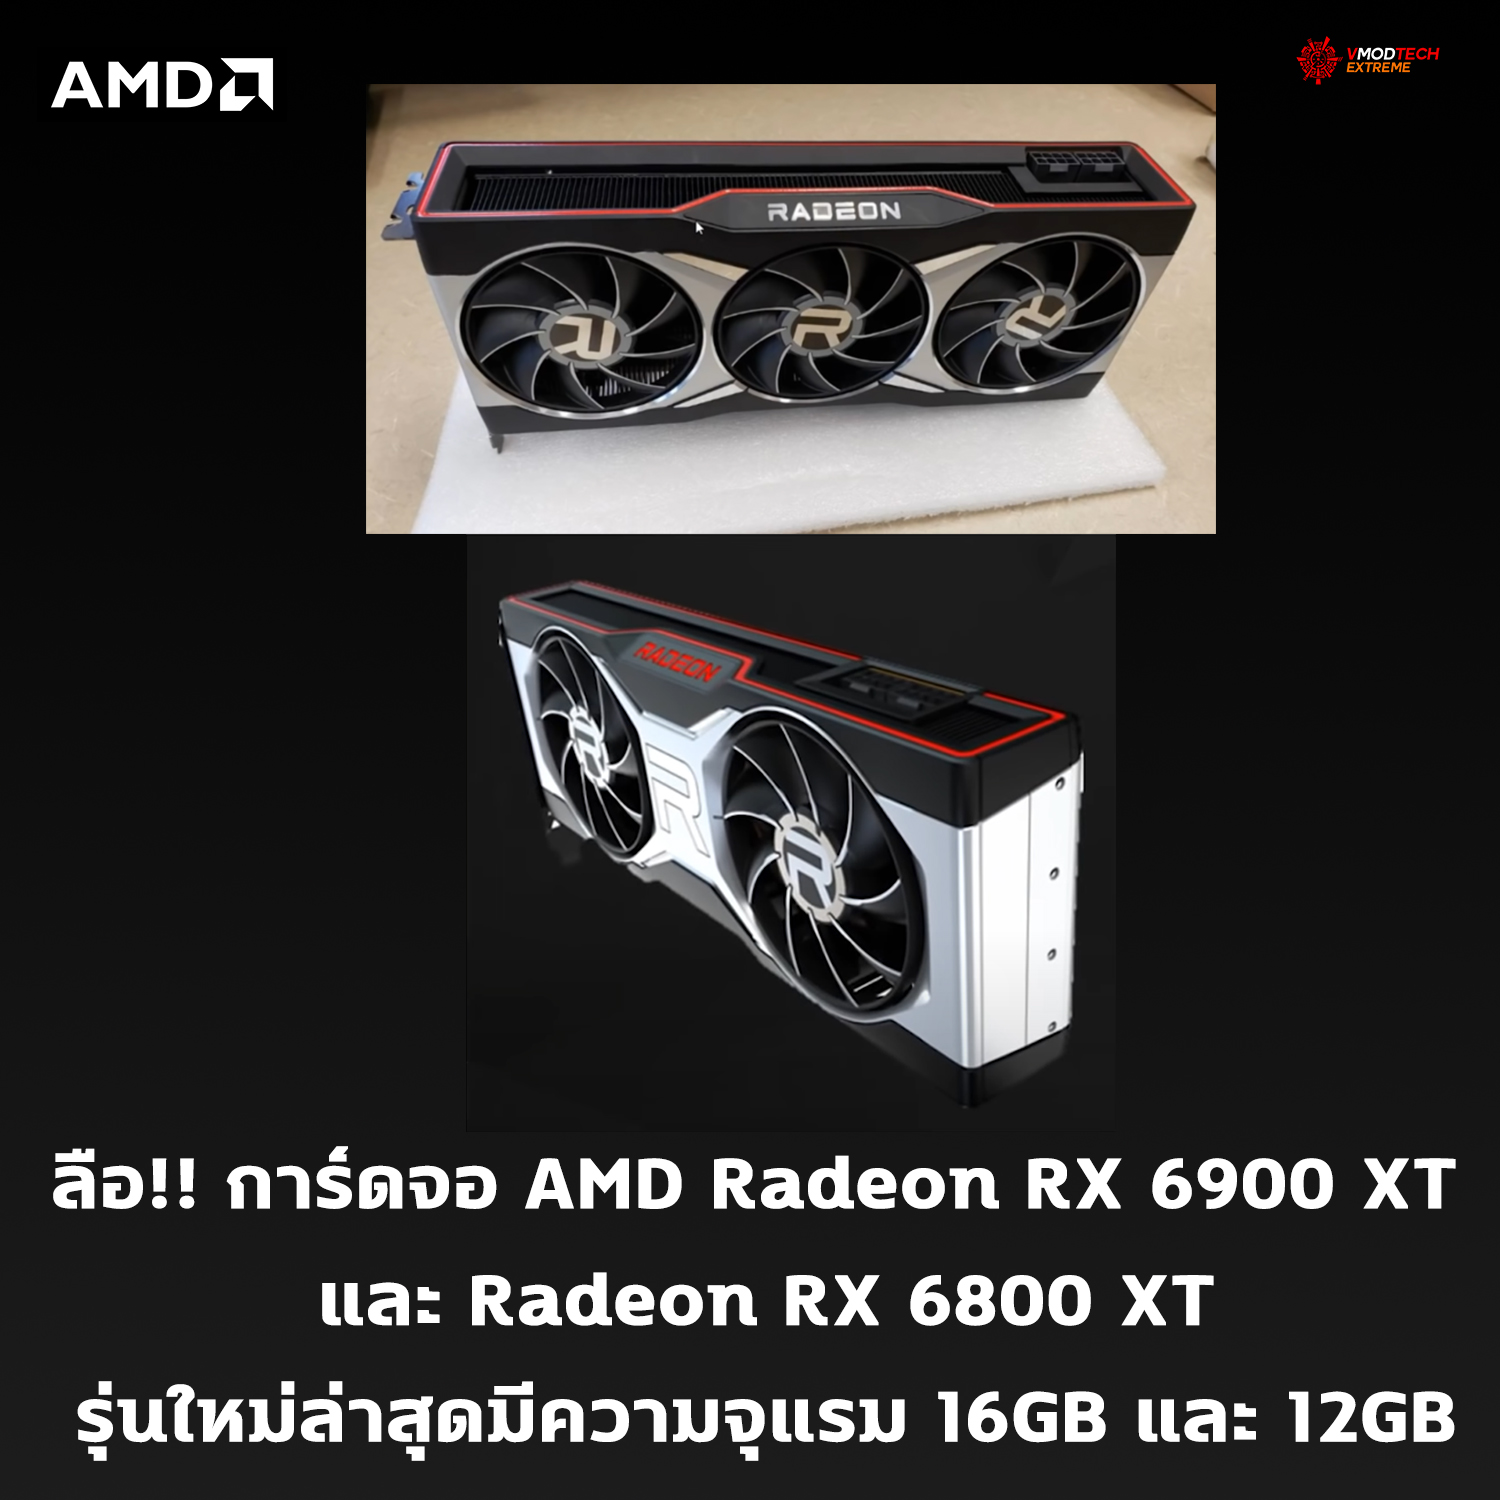 amd radeon rx 6900 radeon rx 6800 16gb 12gb vram ลือ!! การ์ดจอ AMD Radeon RX 6900 XT และ Radeon RX 6800 XT รุ่นใหม่ล่าสุดมีความจุแรม 16GB และ 12GB 